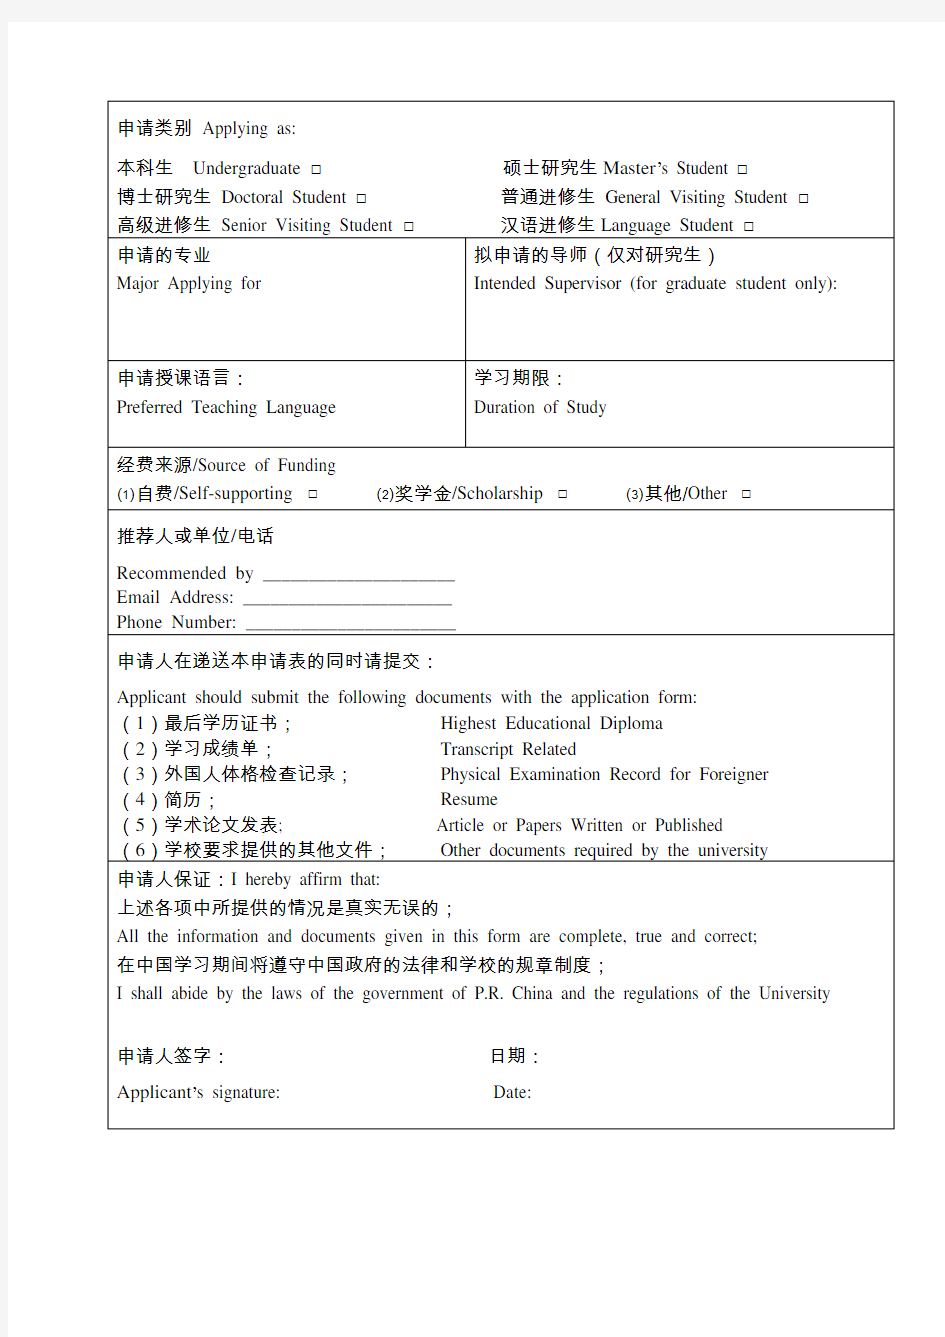 Application Form for Foreign Student 外国留学生申请表